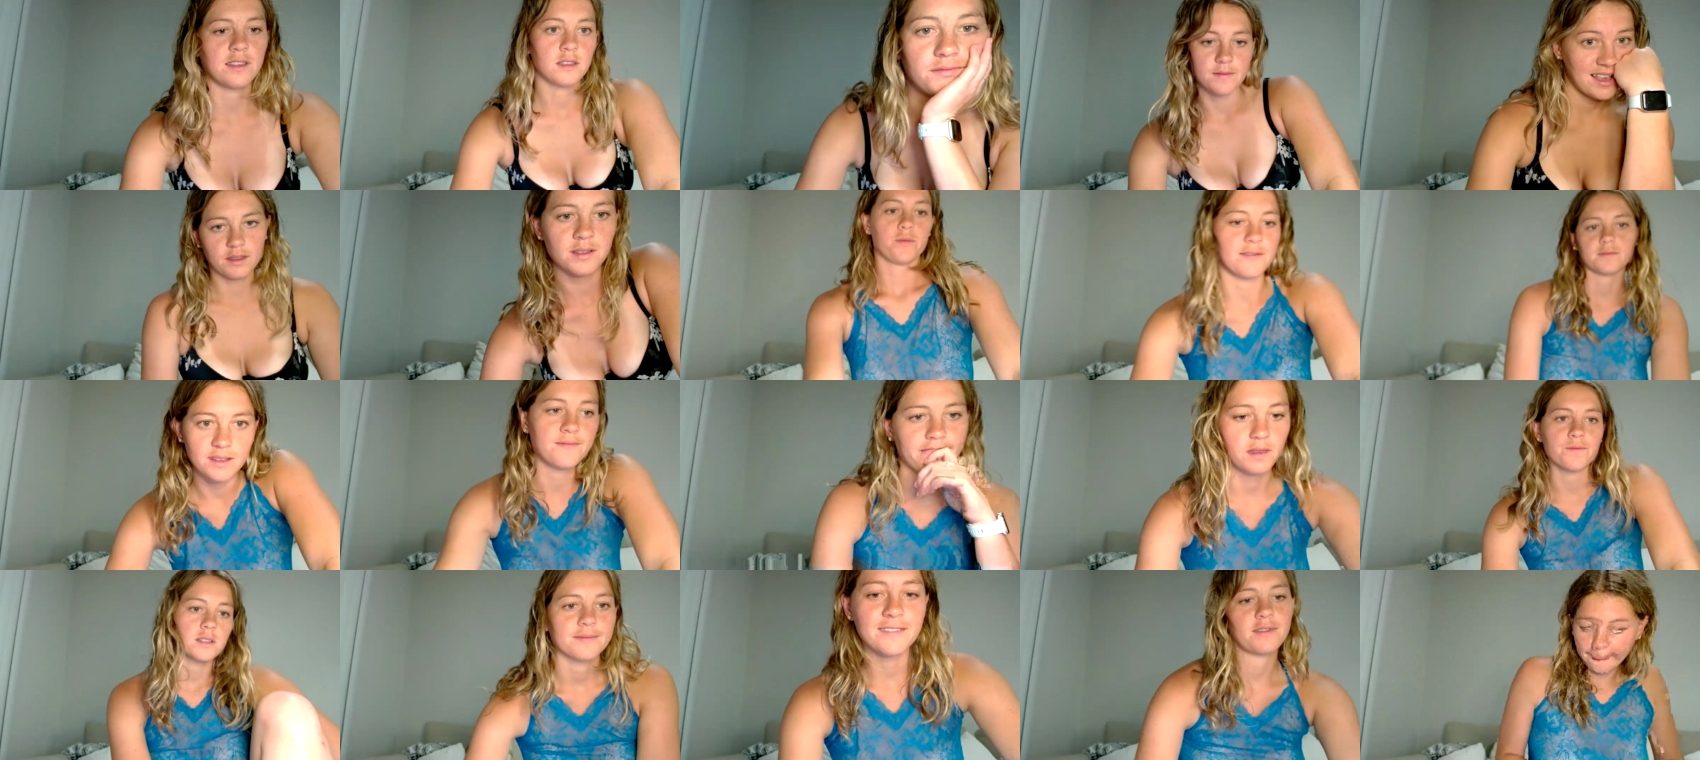 Lilly_mattsson's cam